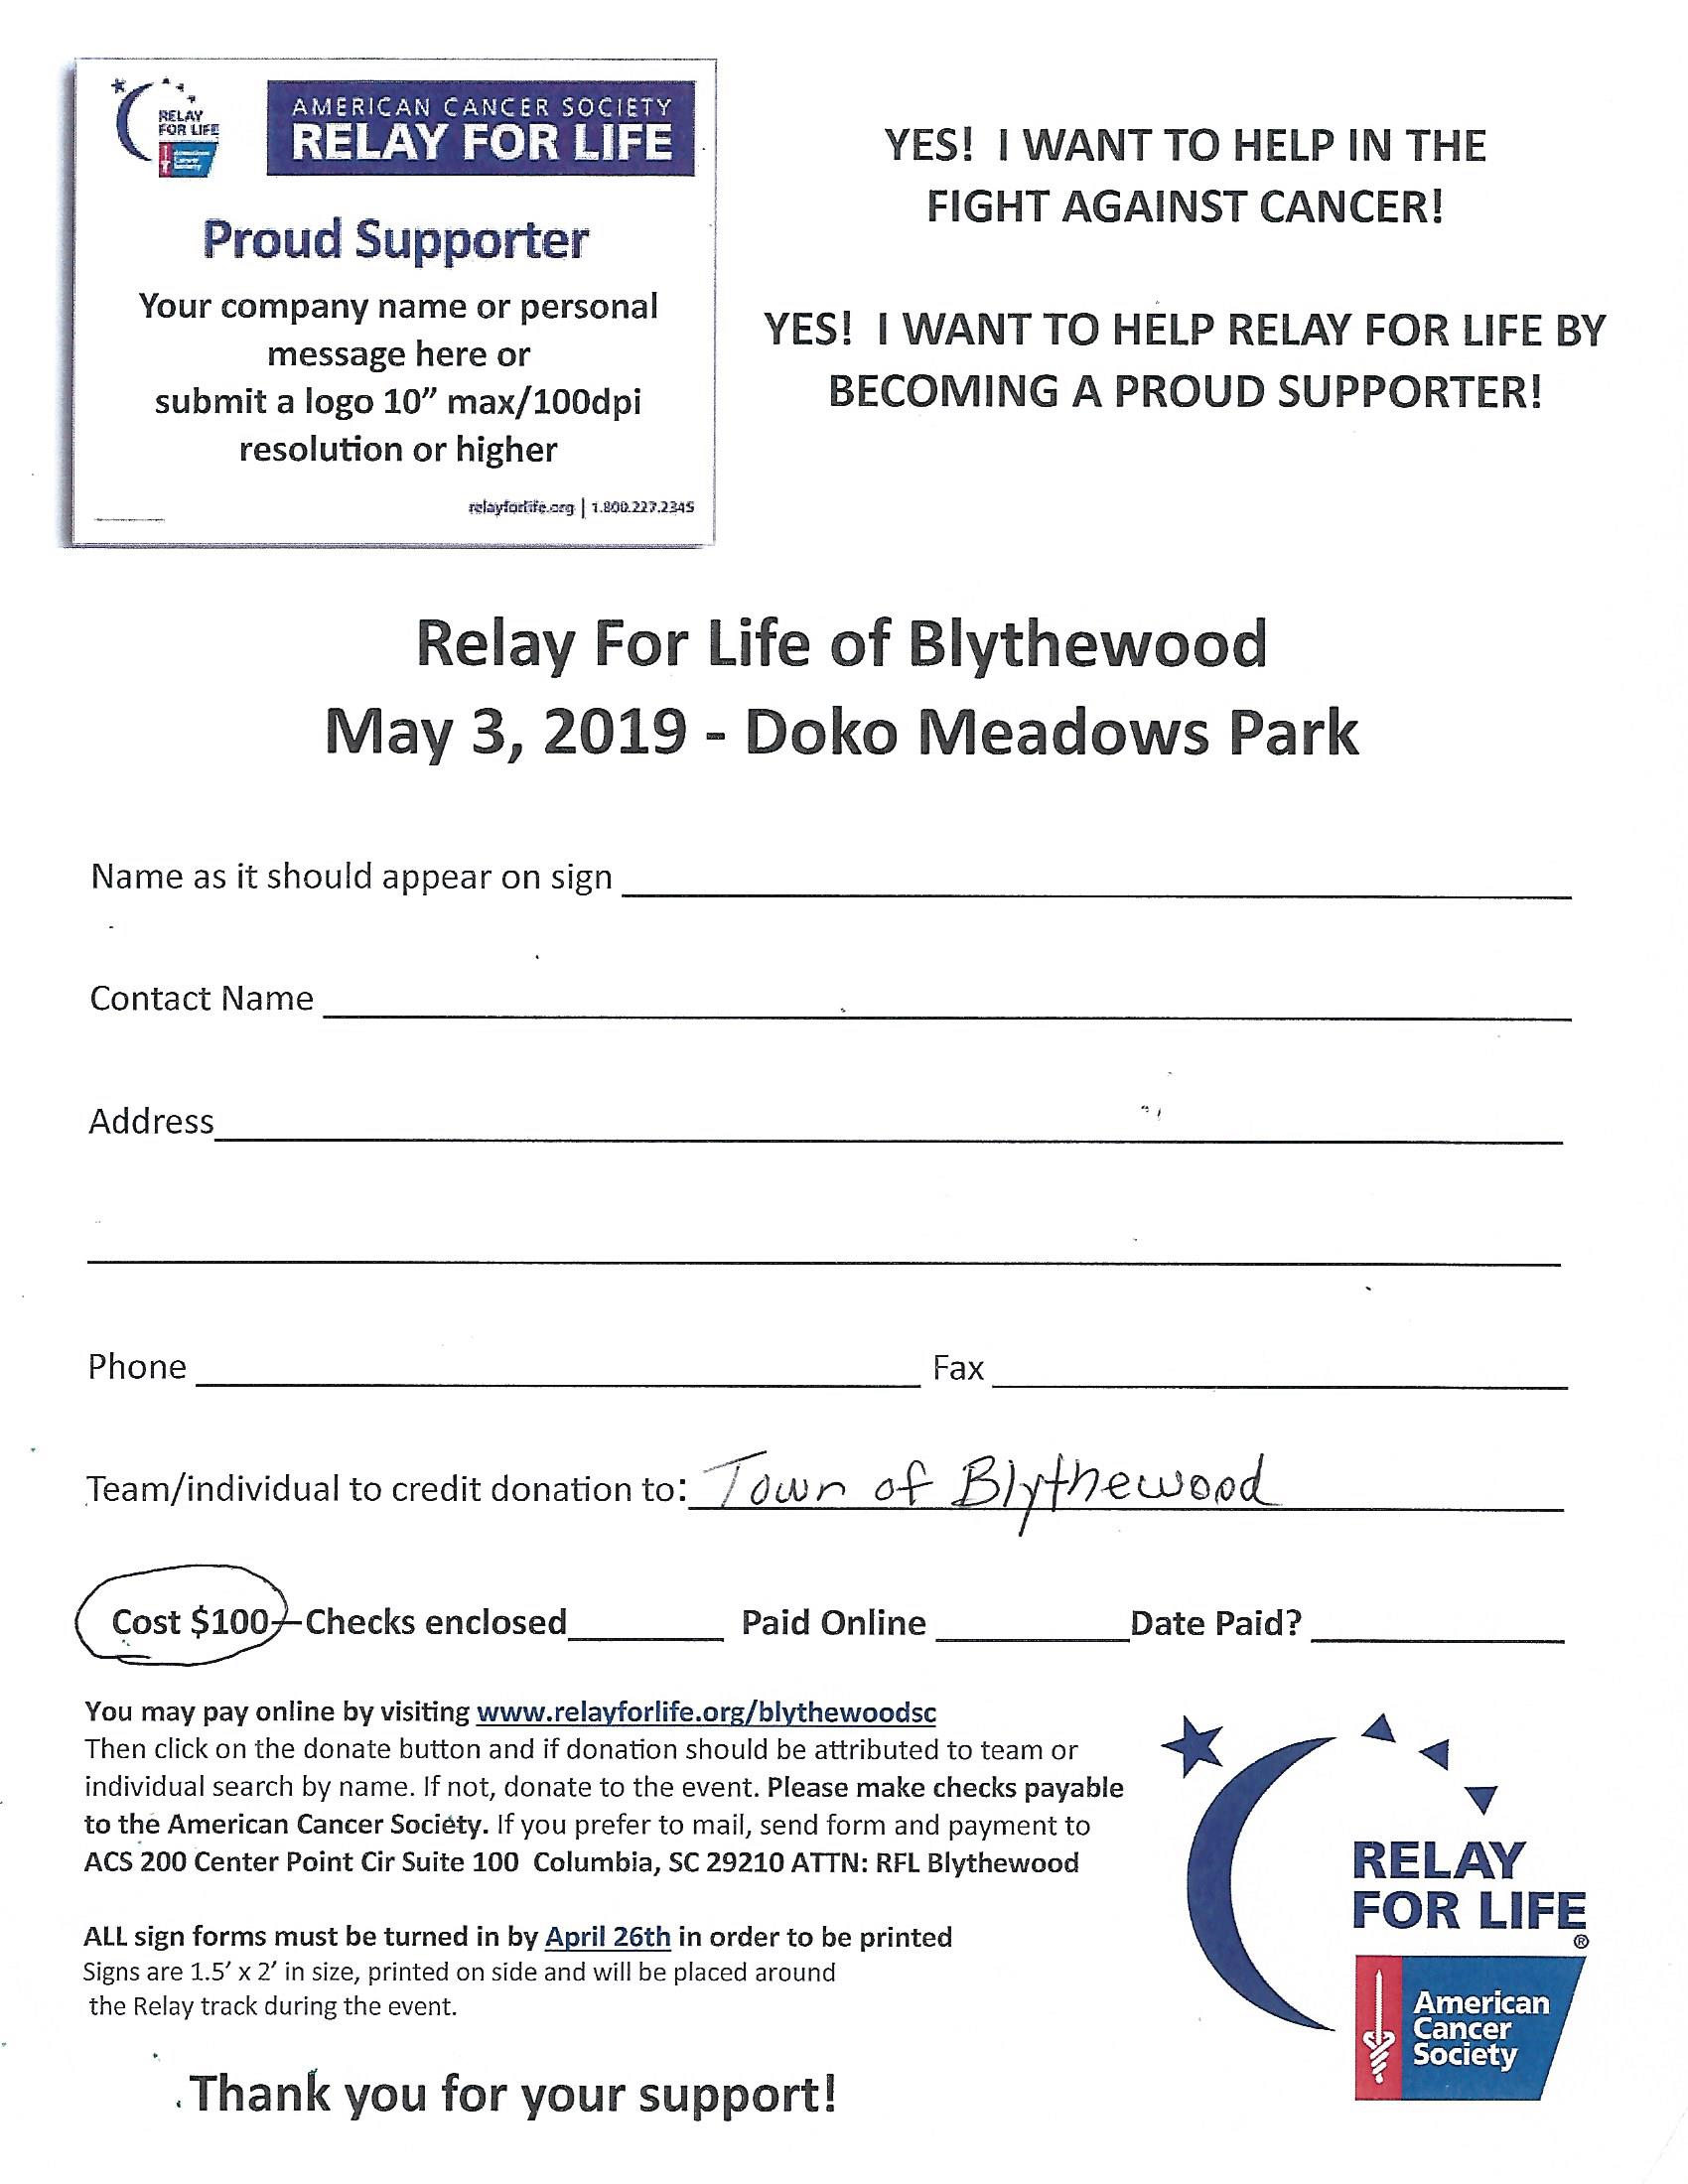 Relay for Life Blythewood Sponsor